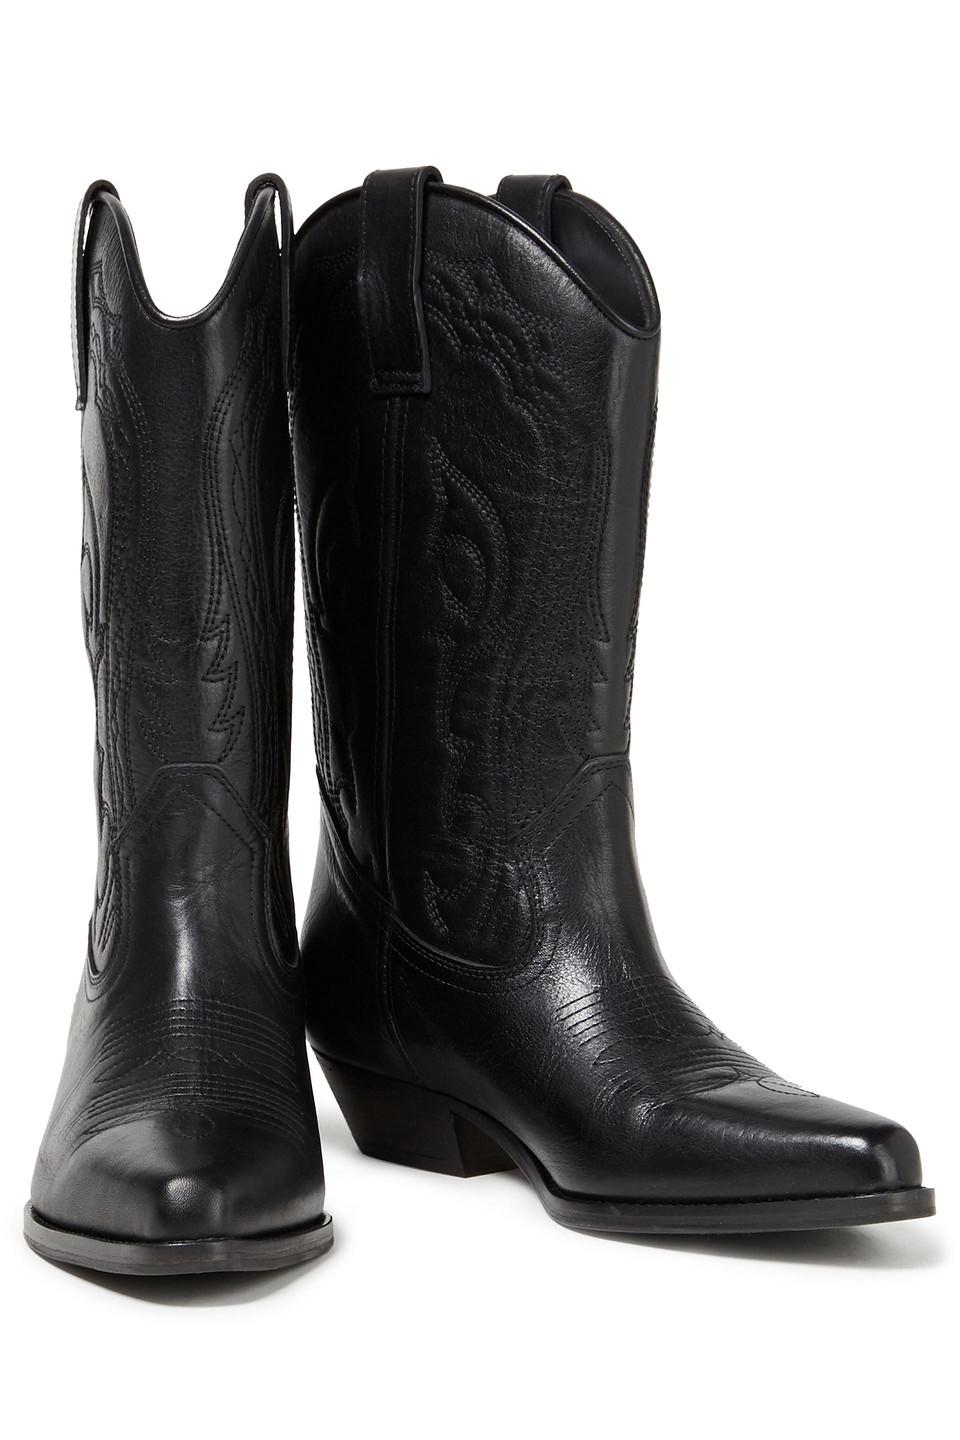 BA&SH Paris Cidie Womens Boots Black US 9 (Fr 40) With Dust Bag